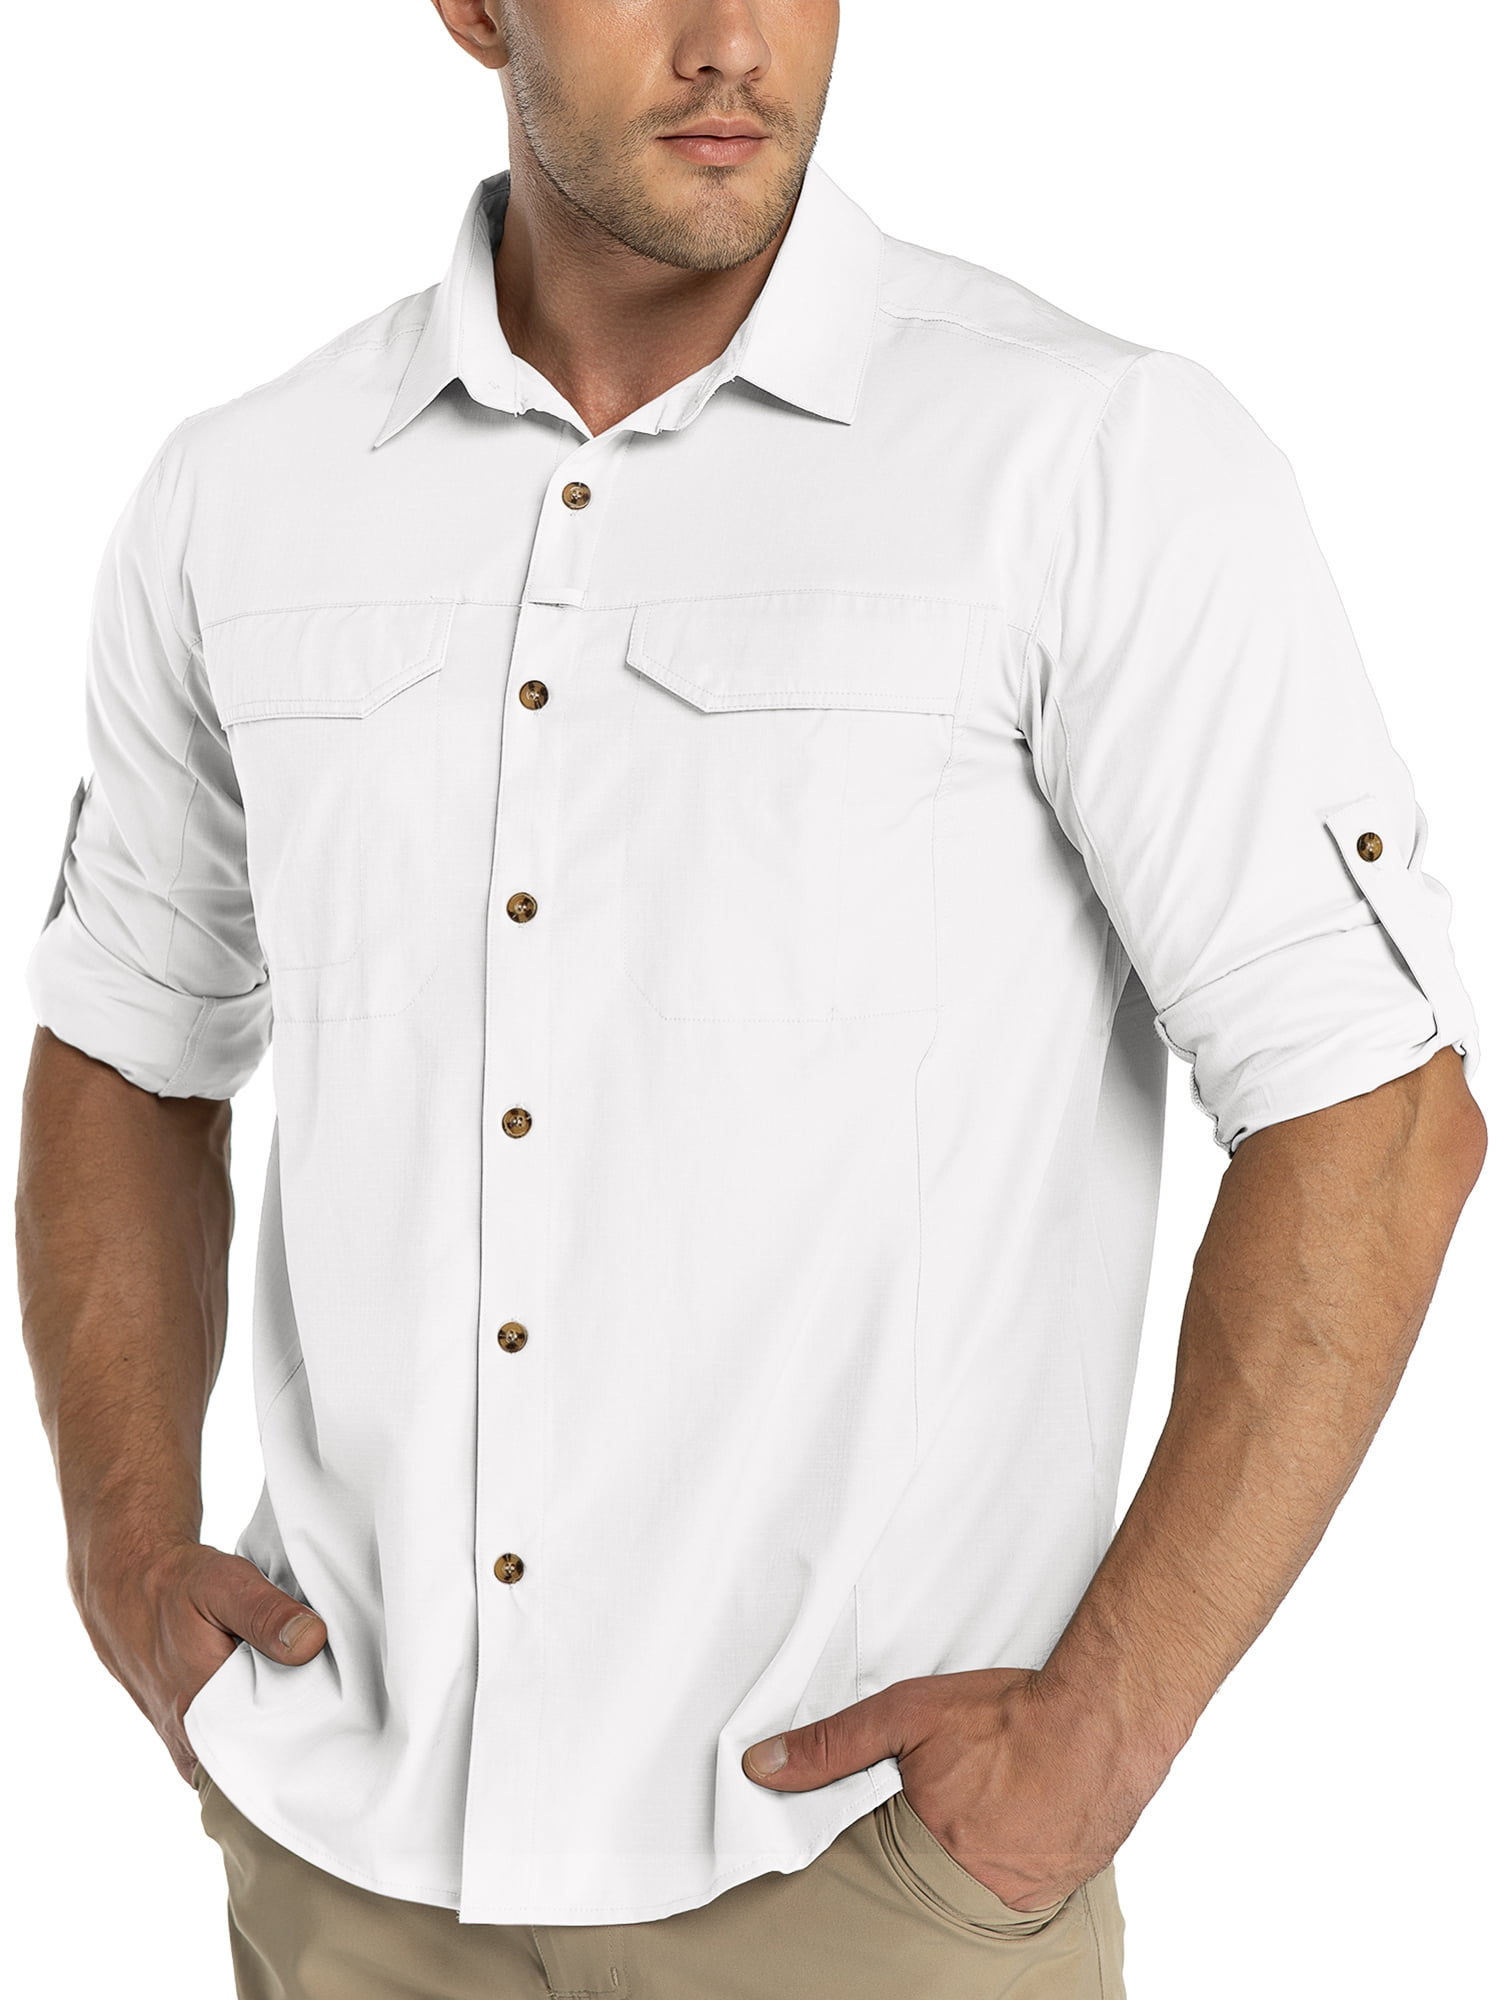 Men's Tactical Shirts Quick Dry UV Protection Breathable Long Sleeve Hiking Fishing Shirts, Black / XL